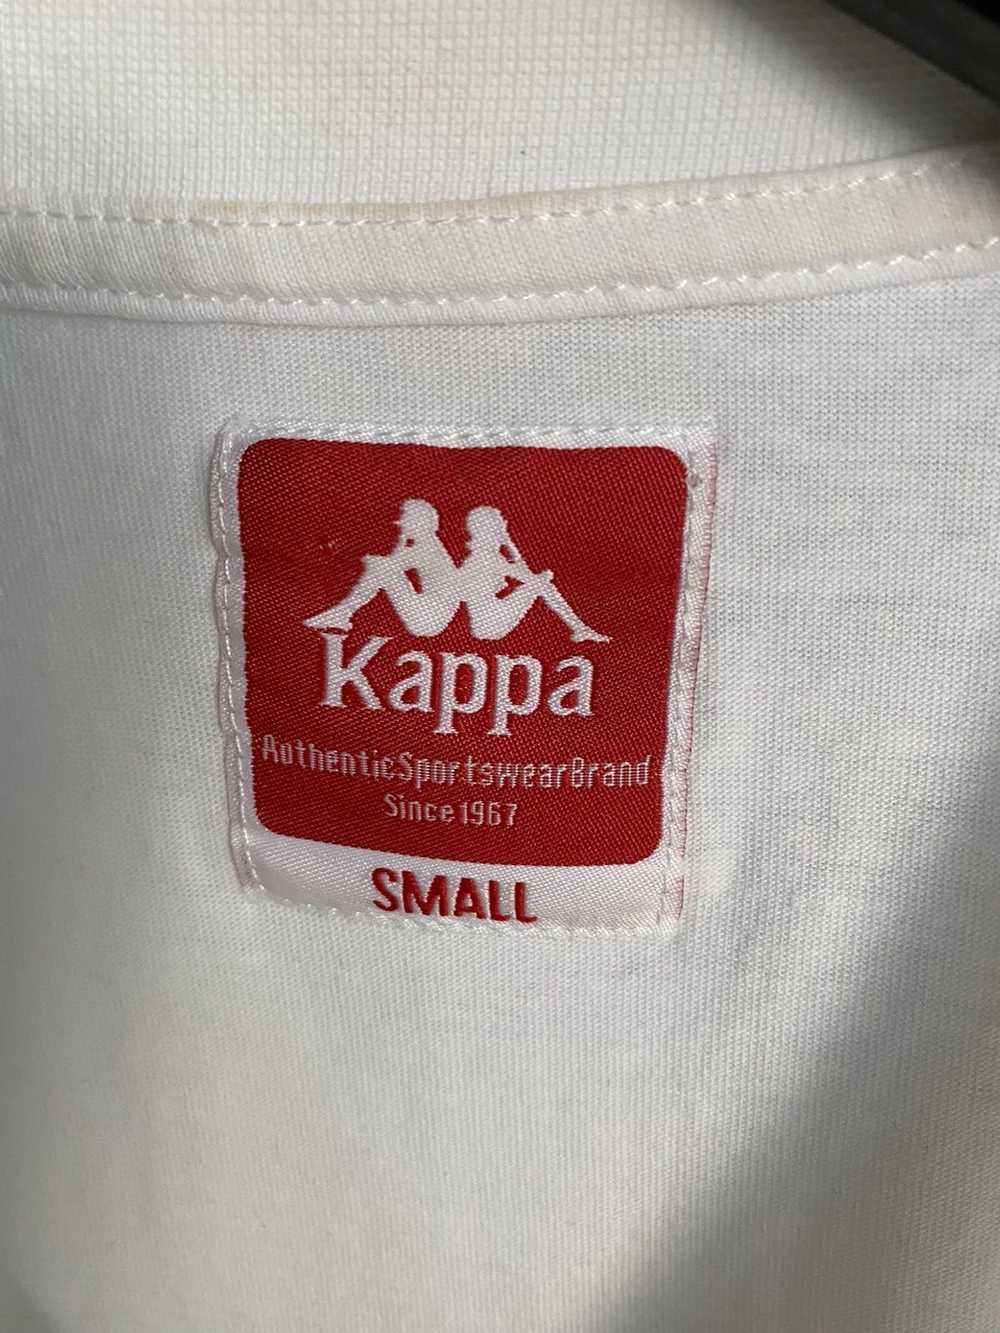 Kappa Kappa T shirt - image 3